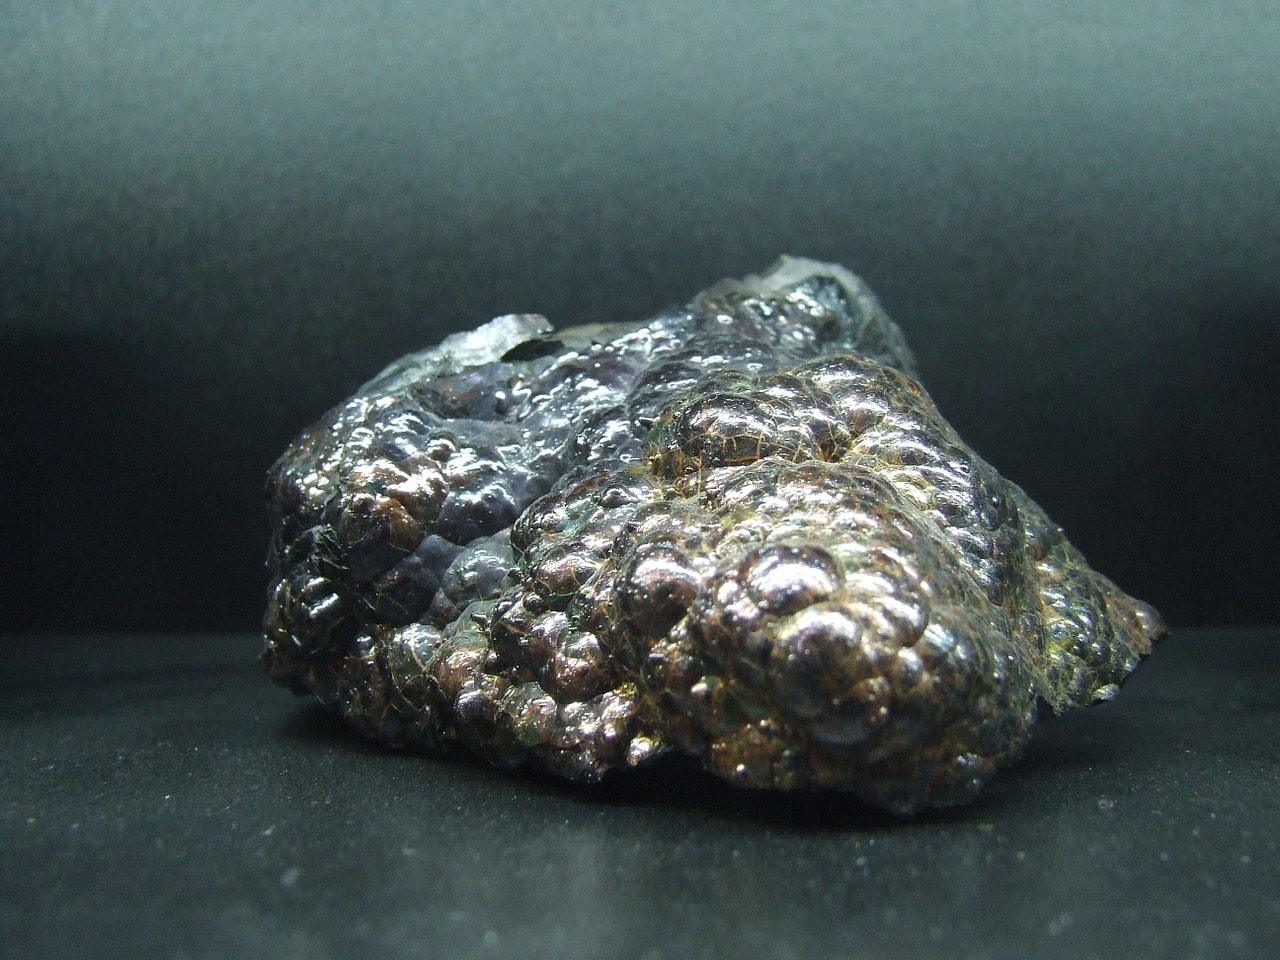 Hematite with iron ore